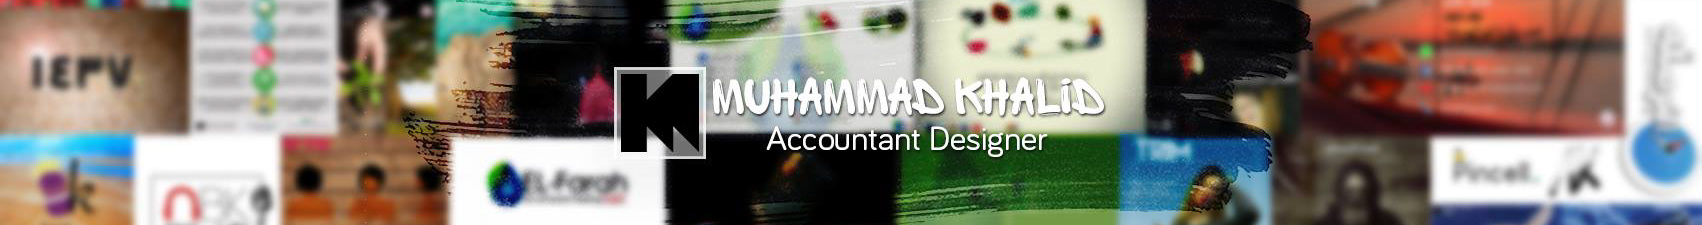 Muhammad Khalid's profile banner